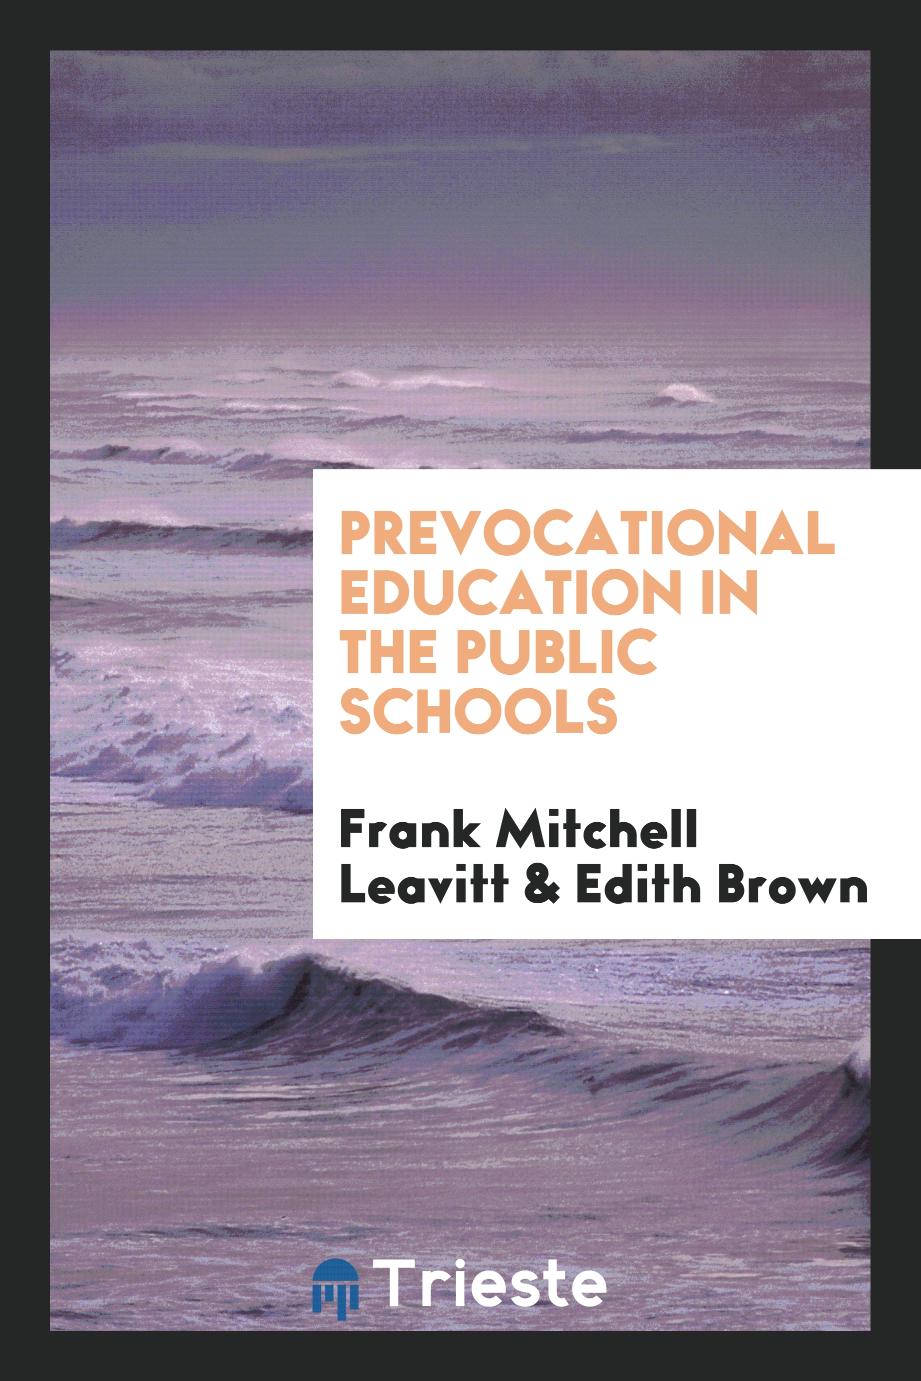 Prevocational education in the public schools